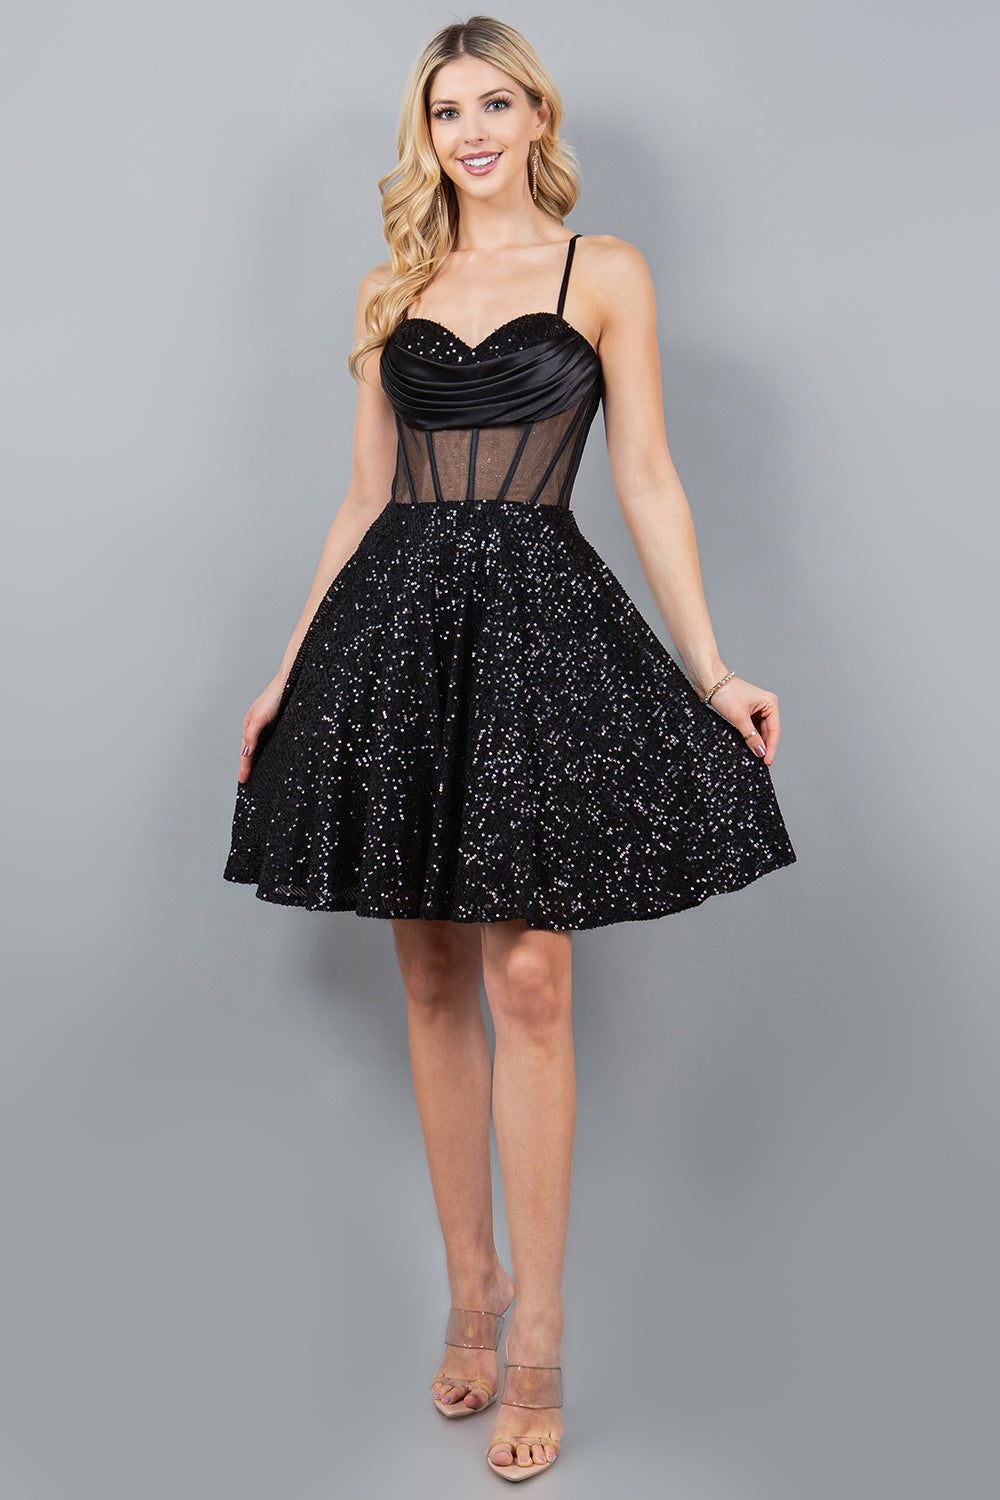 Sequin Short Sheer Corset Dress by Cinderella Couture 8126J